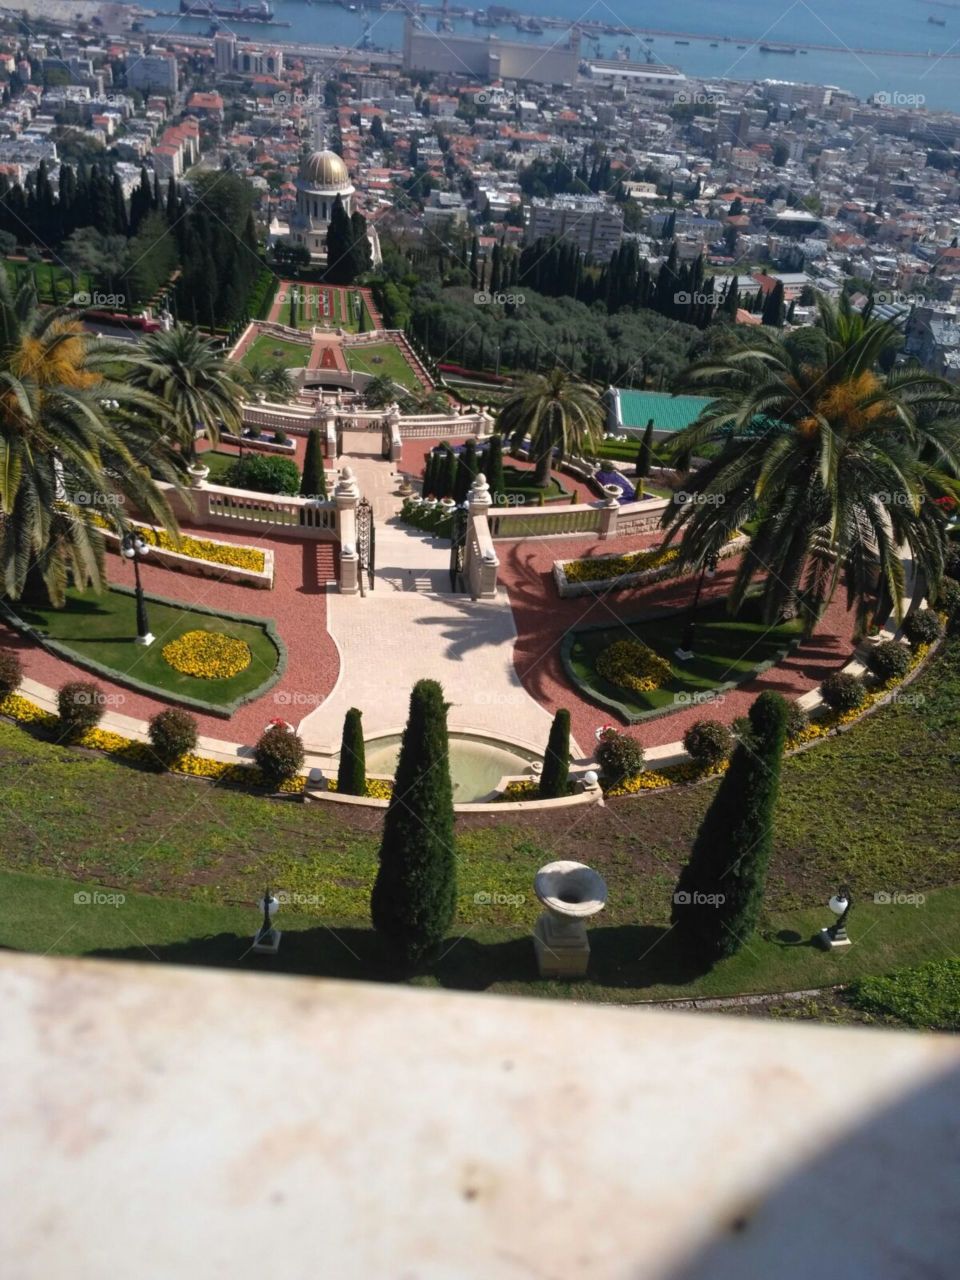 Beauty of Israel's gardens